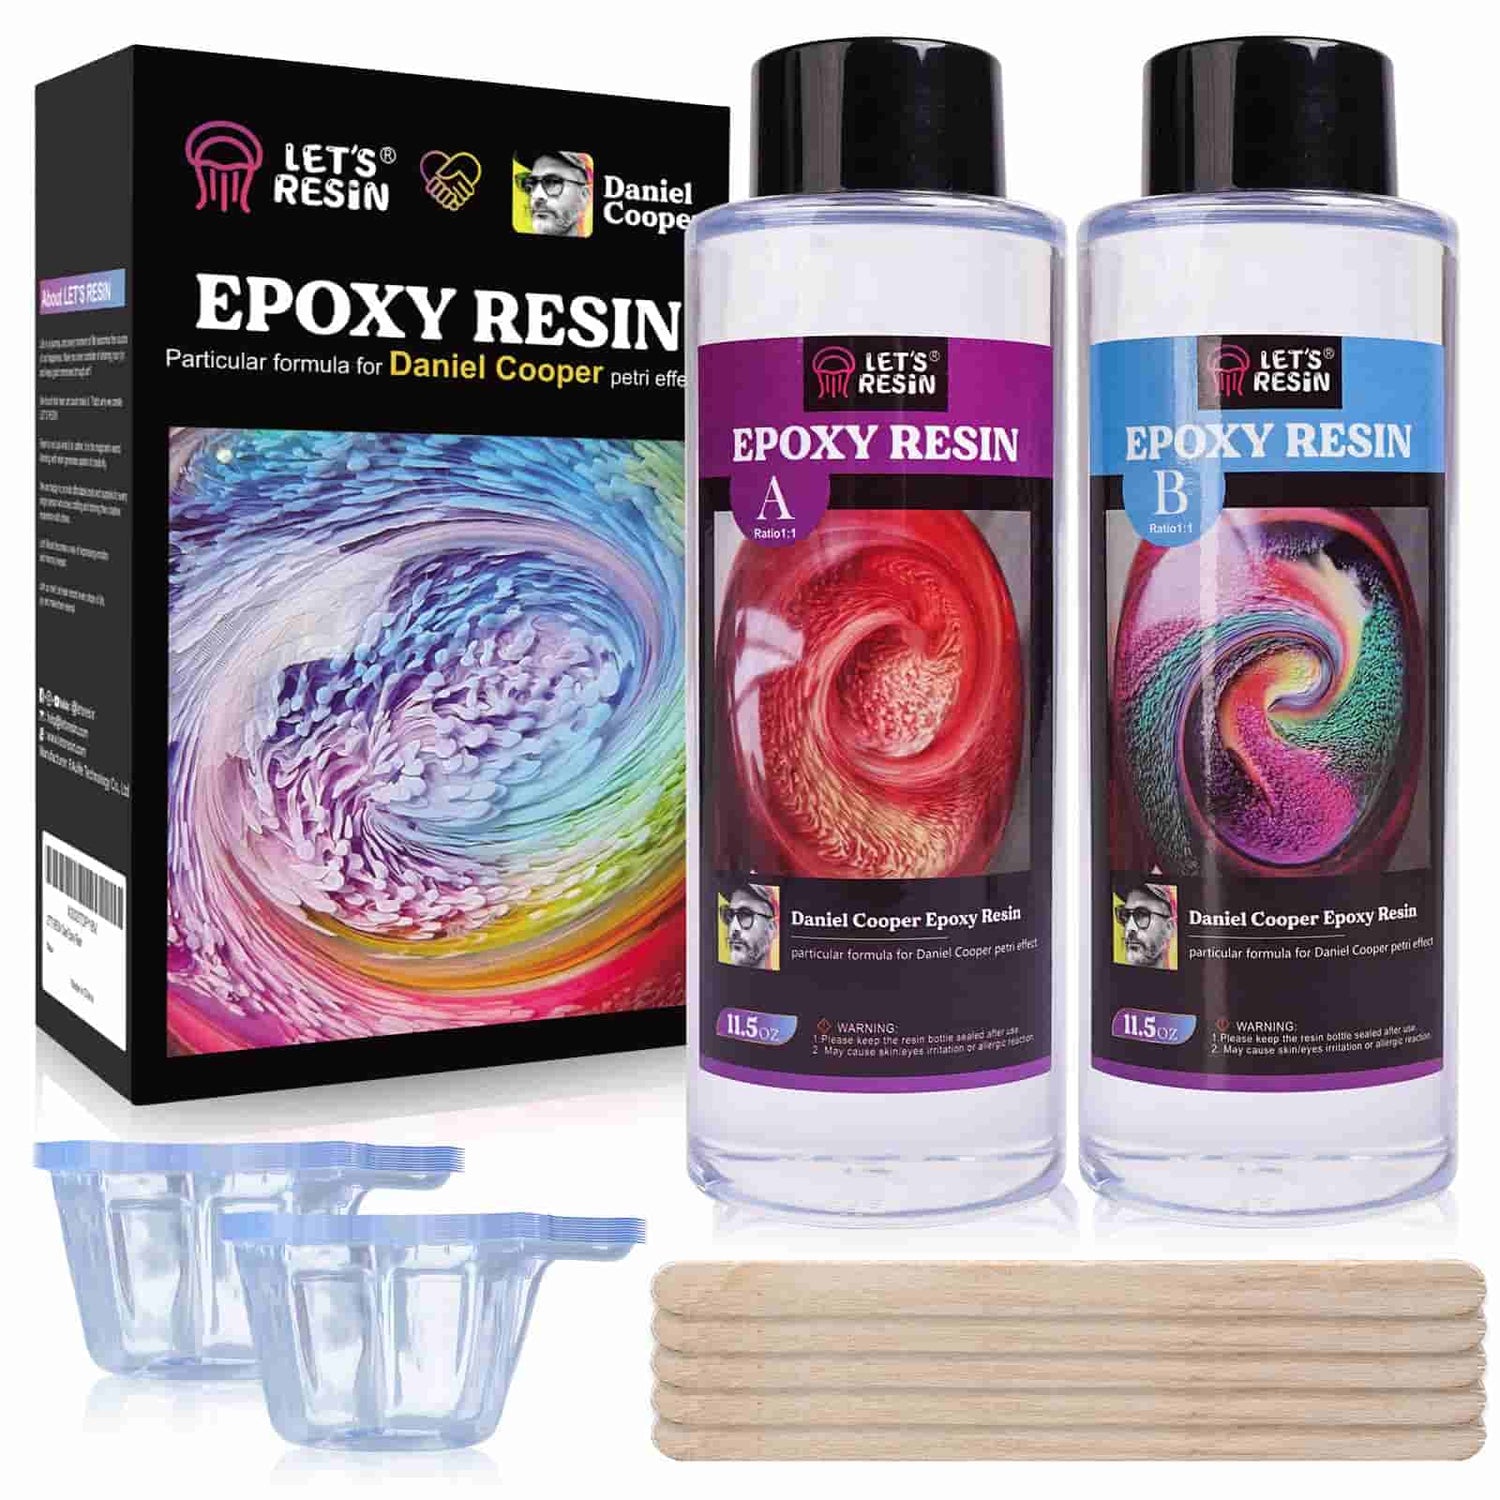 Let's Resin Epoxy Resin Kit, 2 Gallon Deep Pour Epoxy Resin,Bubble